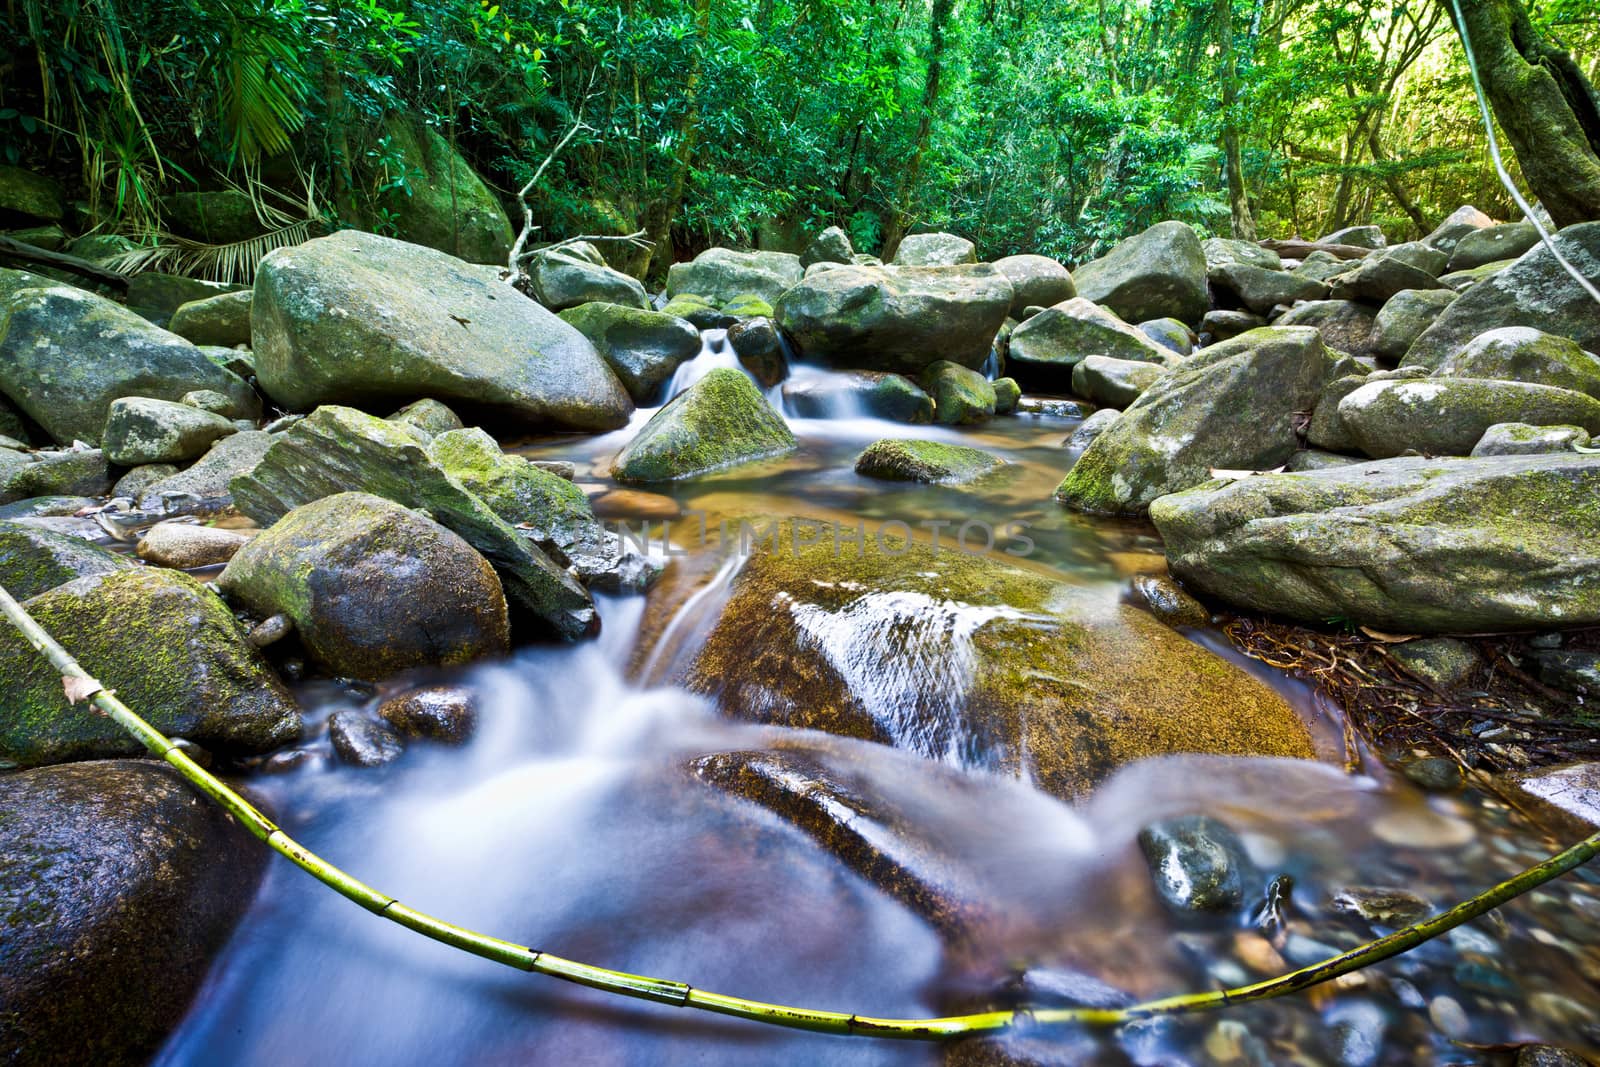 Stream flowing through rocks in a lush green rainforest in Australia